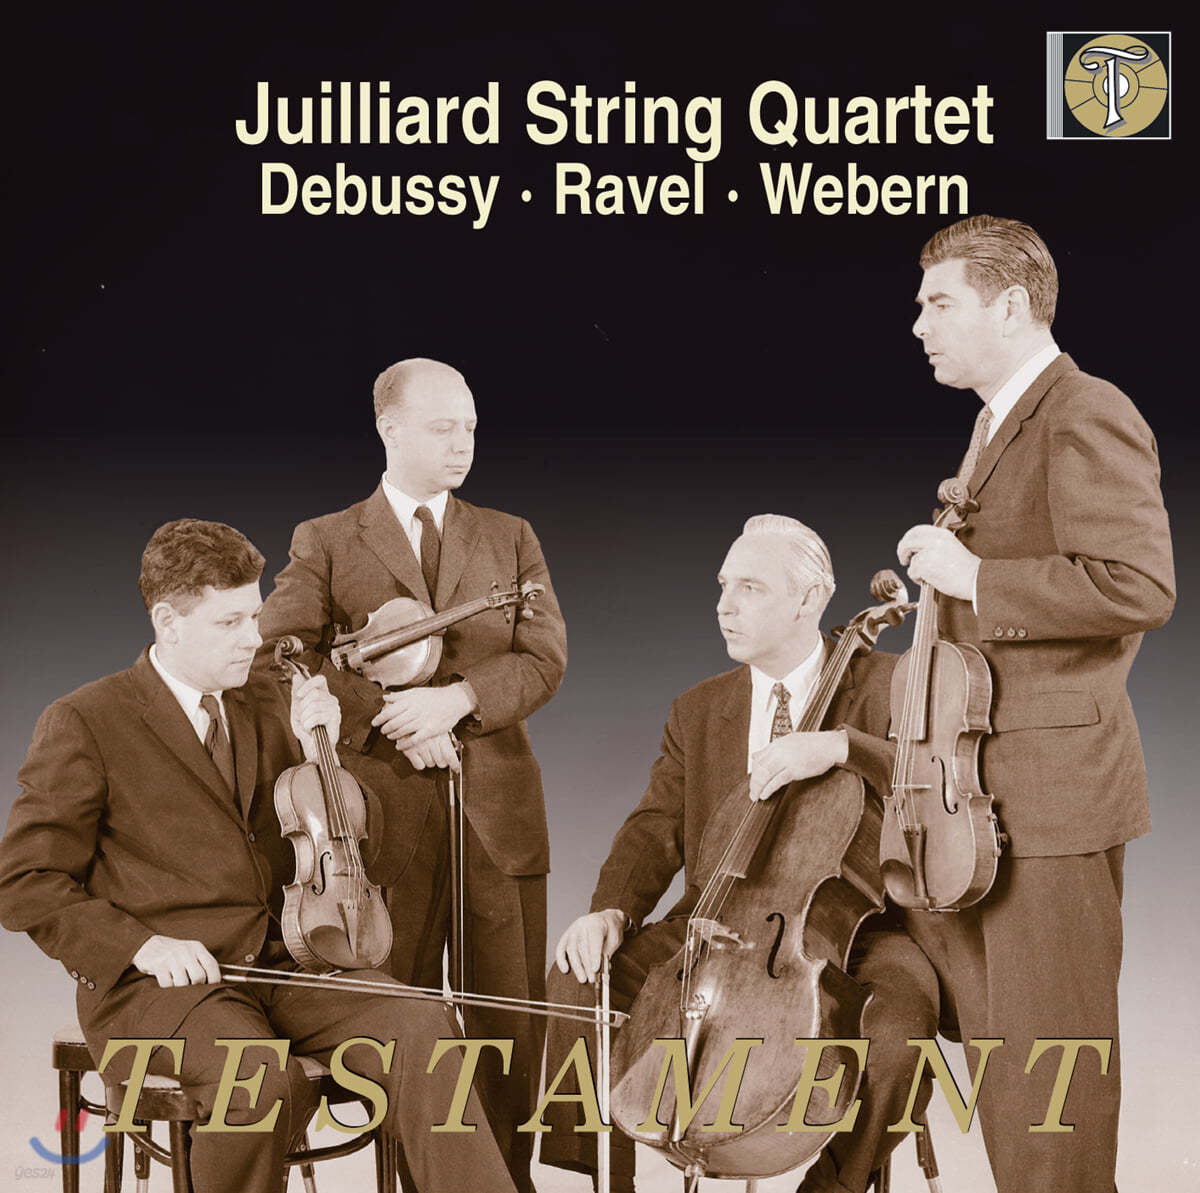 Juilliard String Quartet 드뷔시 / 라벨 / 베베른: 현악 사중주 - 줄리어드 현악 사중주단 